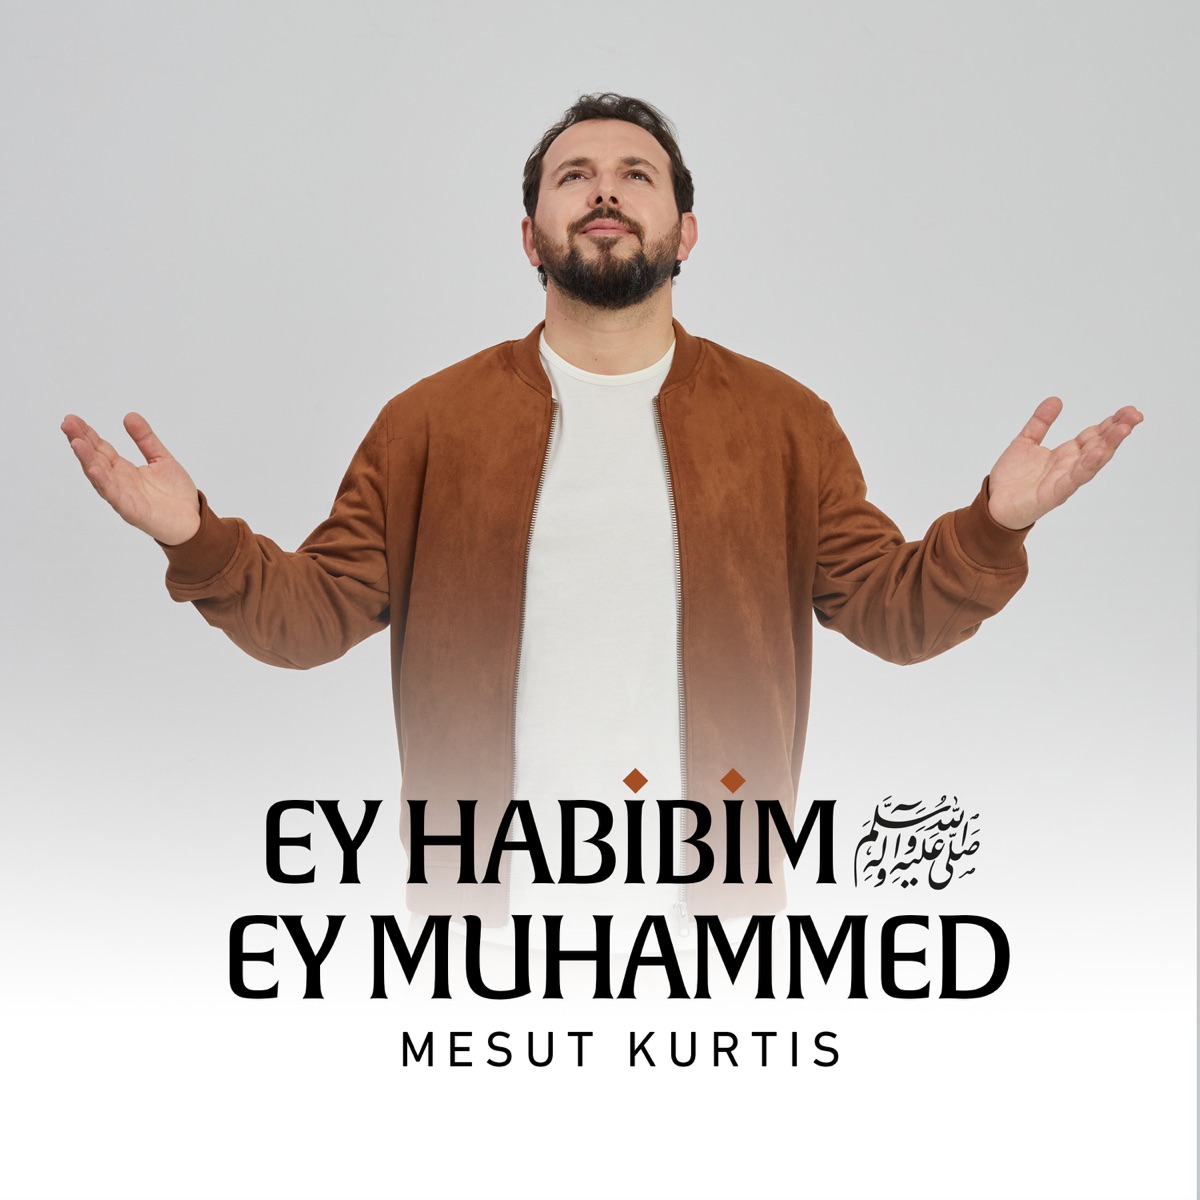 This Is Mesut Kurtis - playlist by Spotify | Spotify